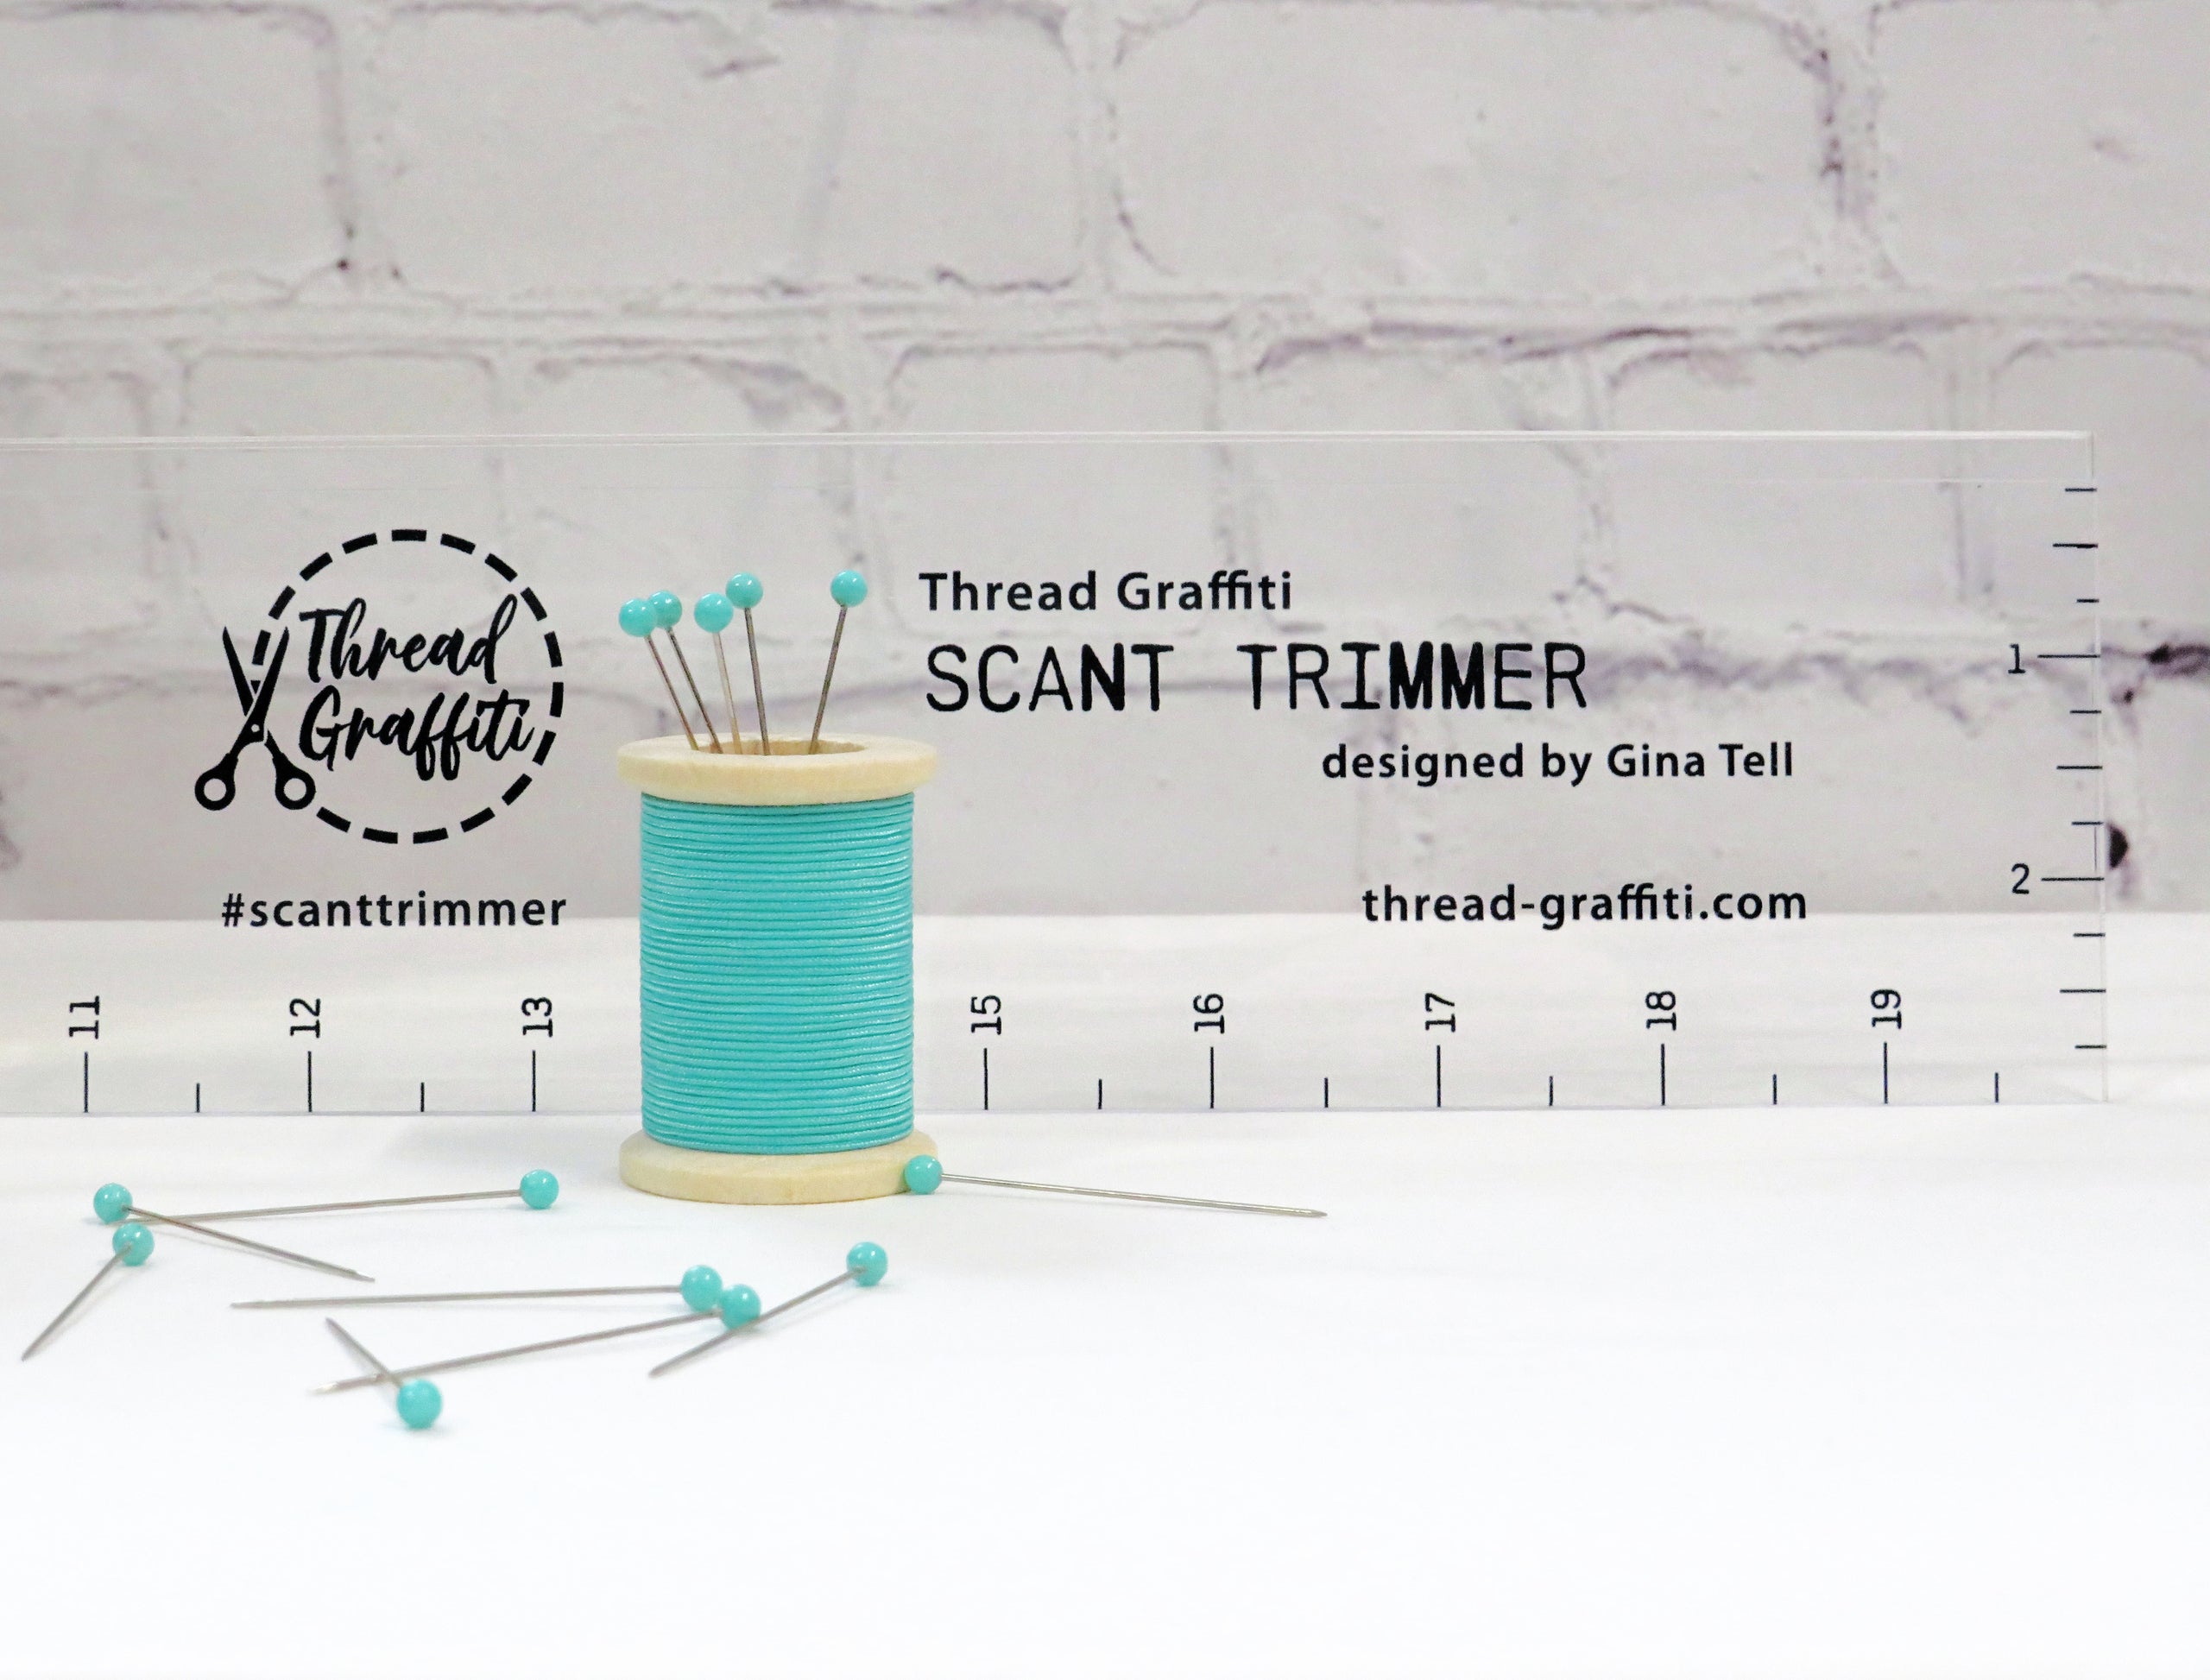 Stitch Buzz Stretch Ruler 1.5 x 10 inch Ruler for Knit Fabrics